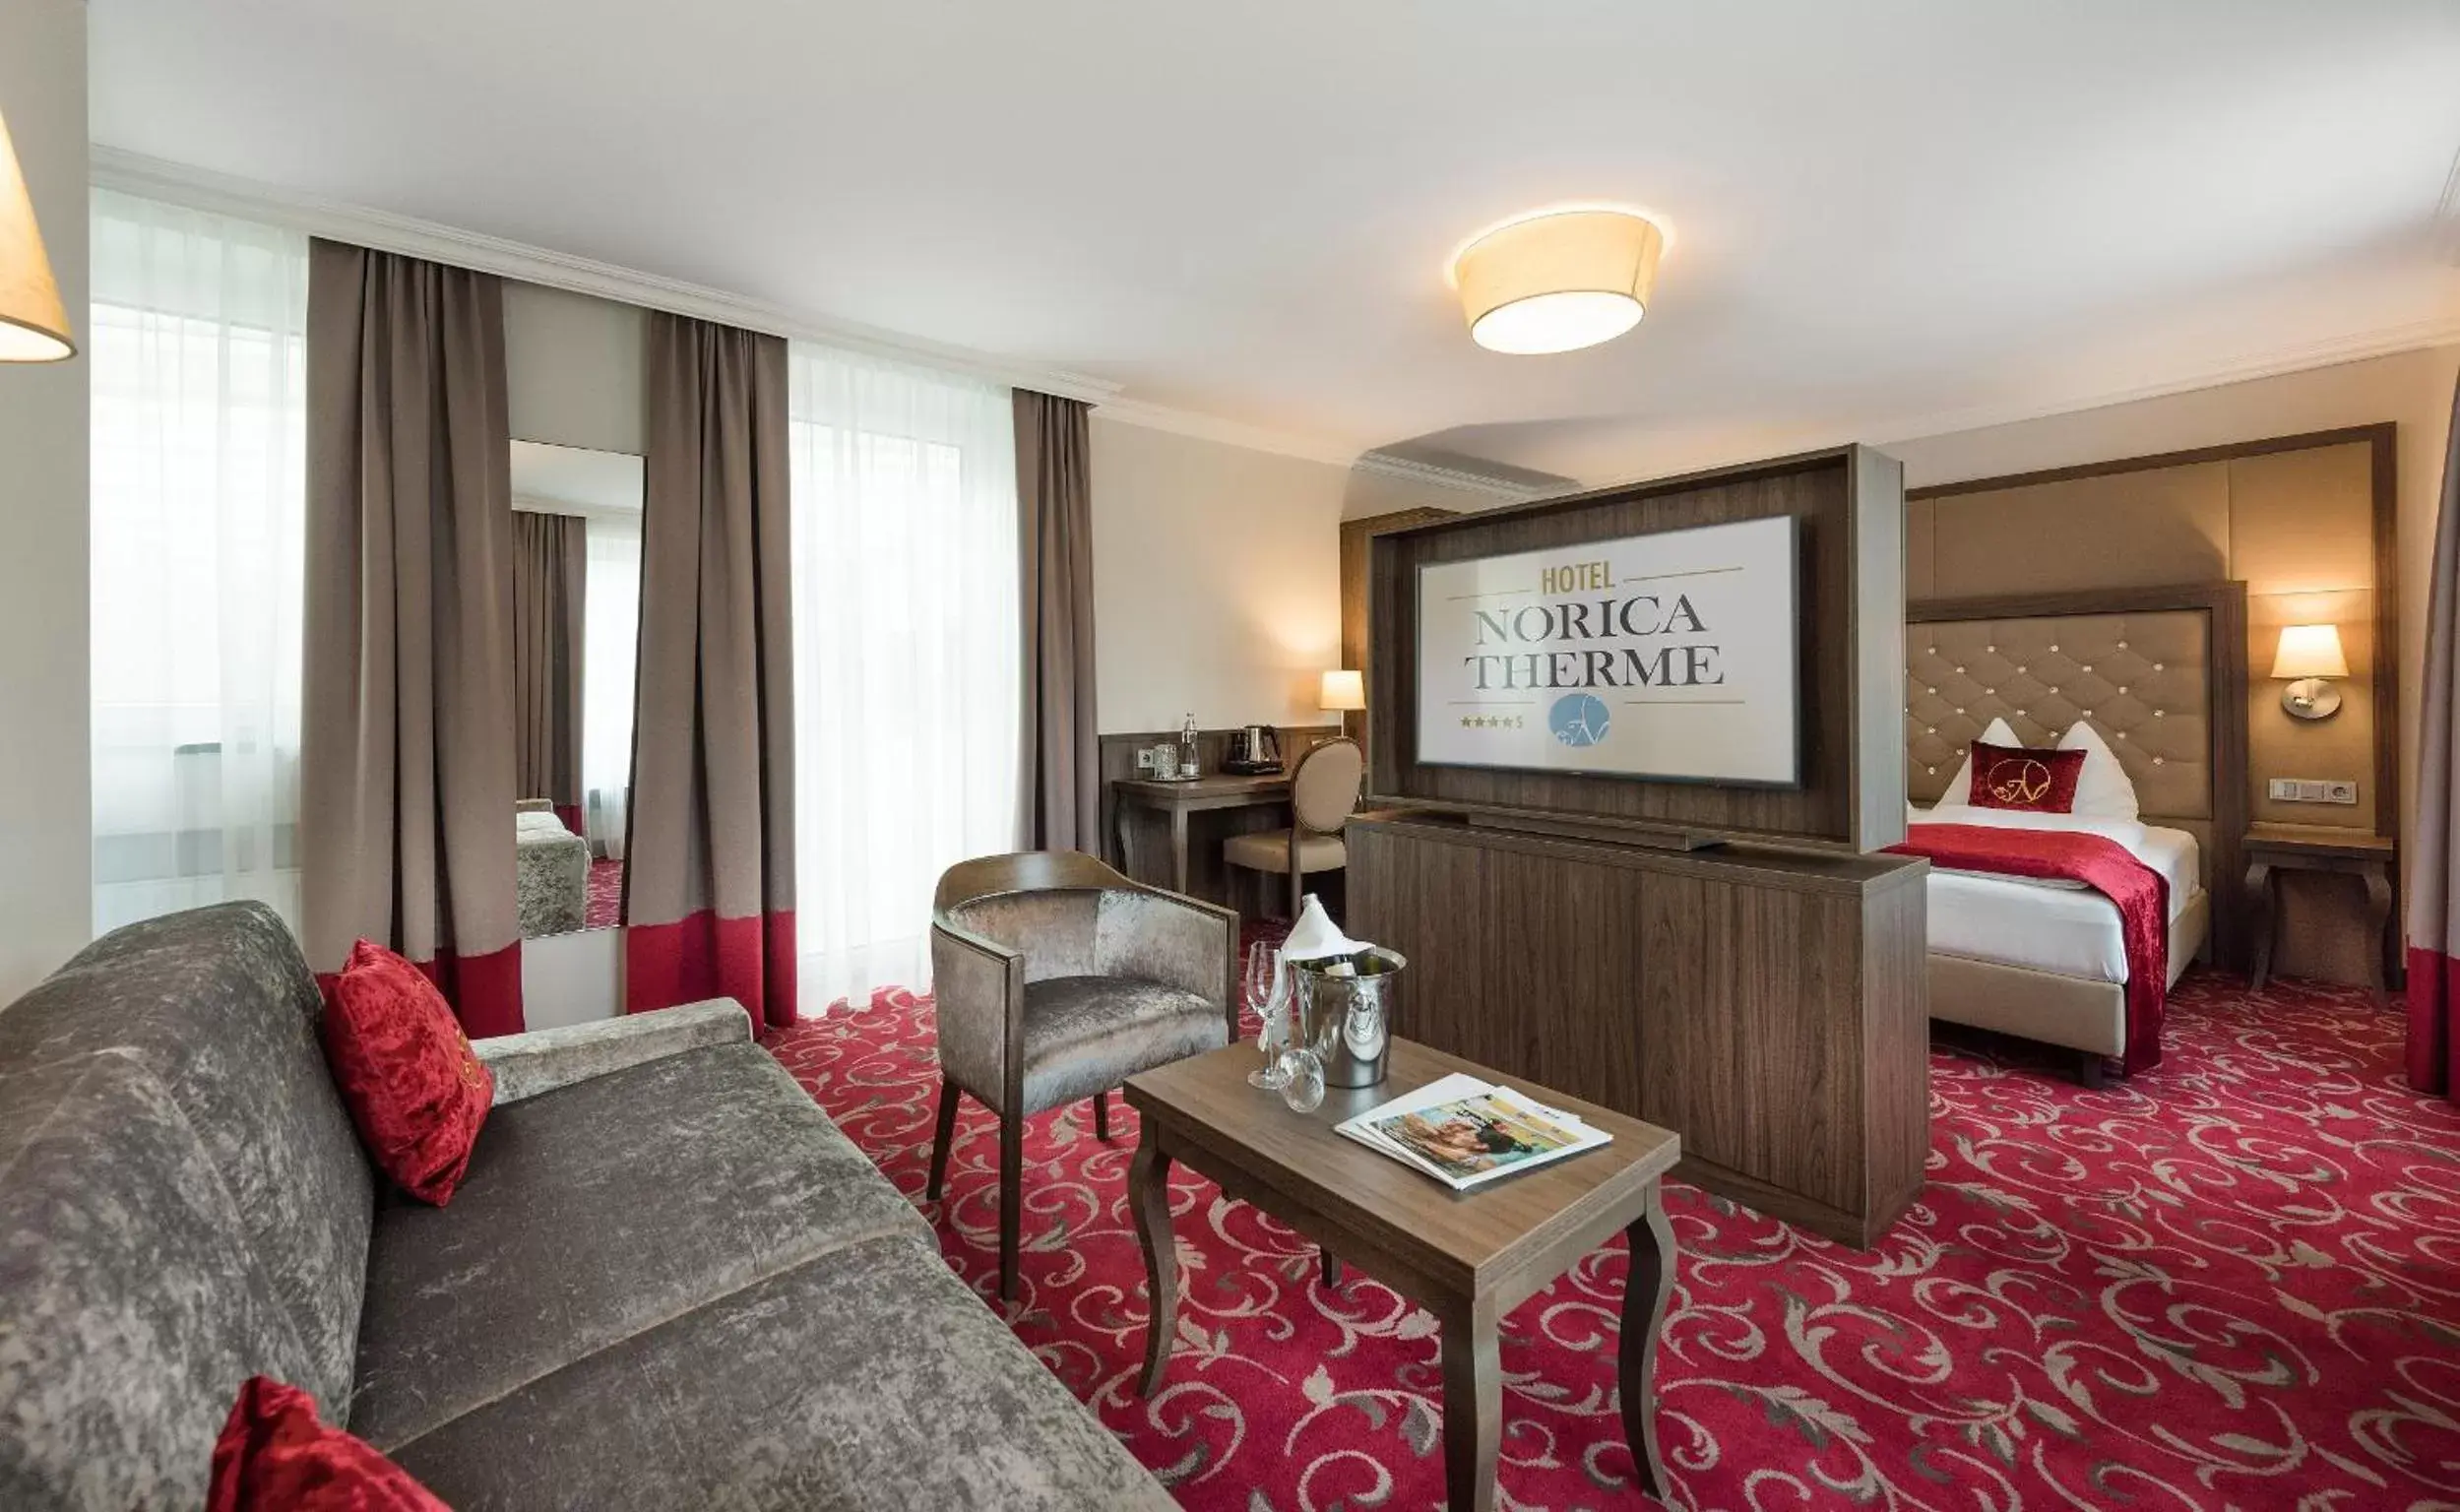 TV and multimedia, Seating Area in Hotel Norica - Thermenhotels Gastein mit dem Bademantel direkt in die Therme